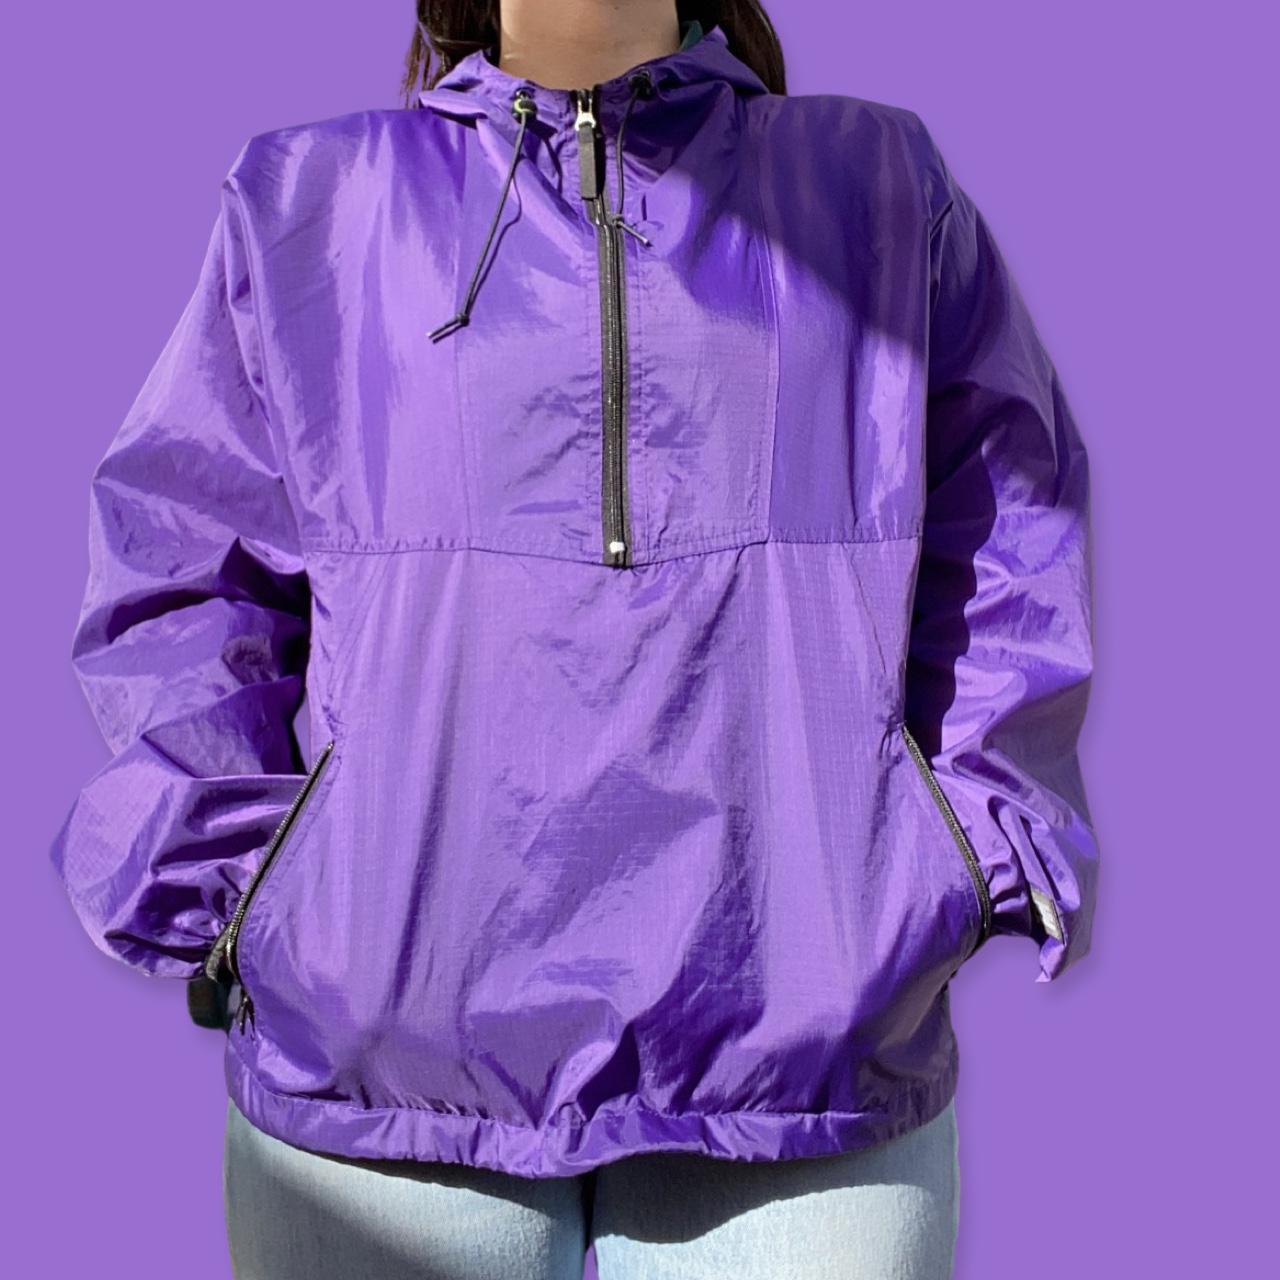 Product Image 1 - Stunning royal purple Helly Hansen